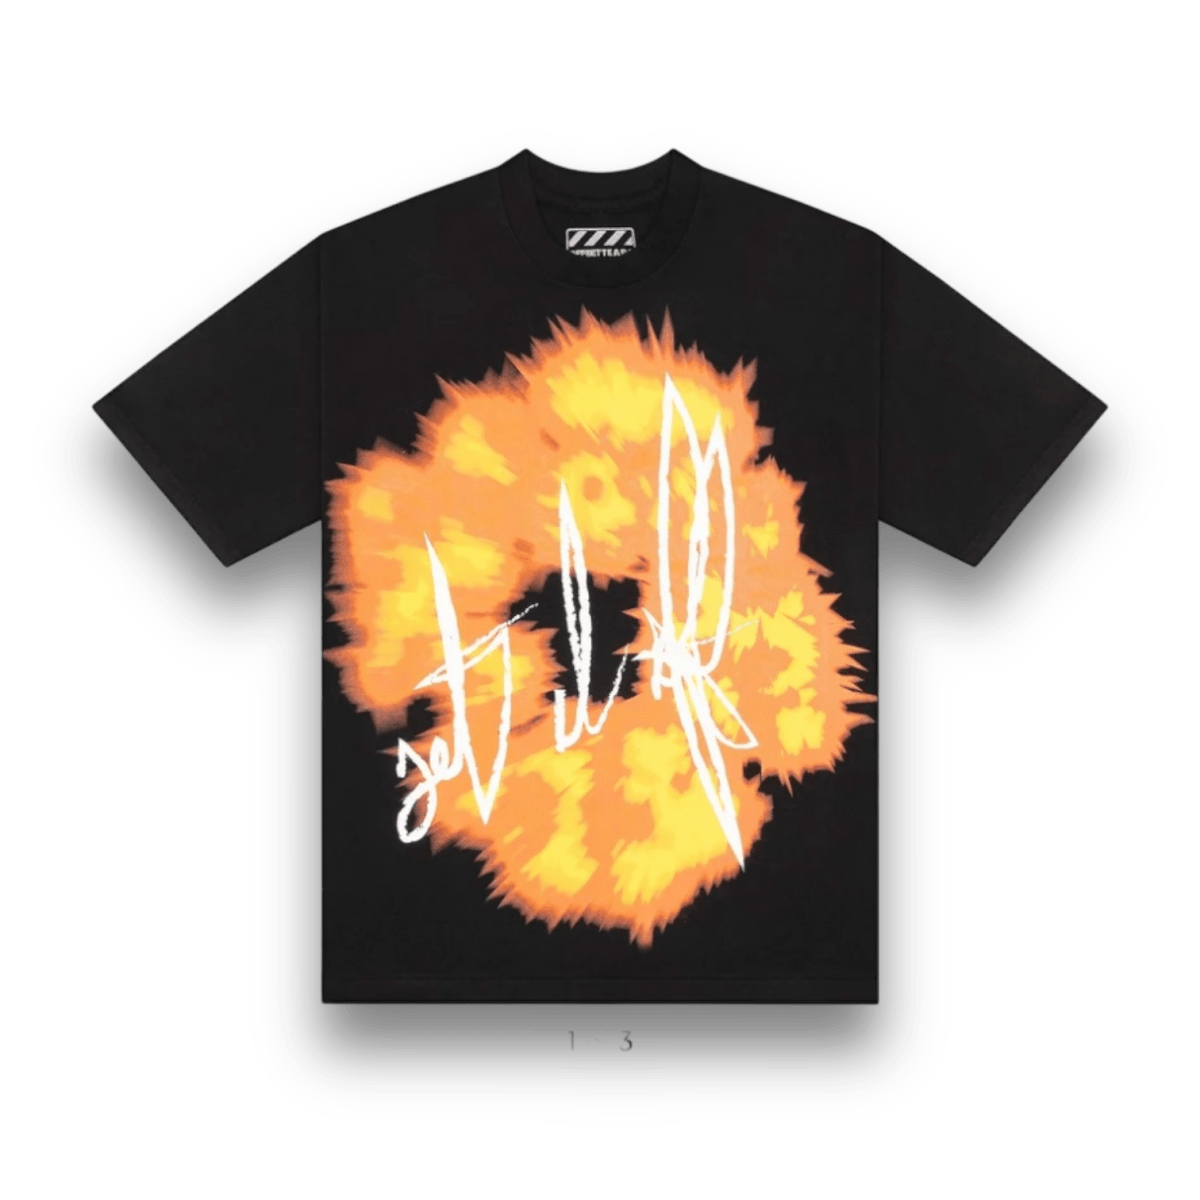 Denim Tears x Offset Set It Off #1 T-Shirt - Black - Clothing - Jawns on Fire Sneakers & Streetwear